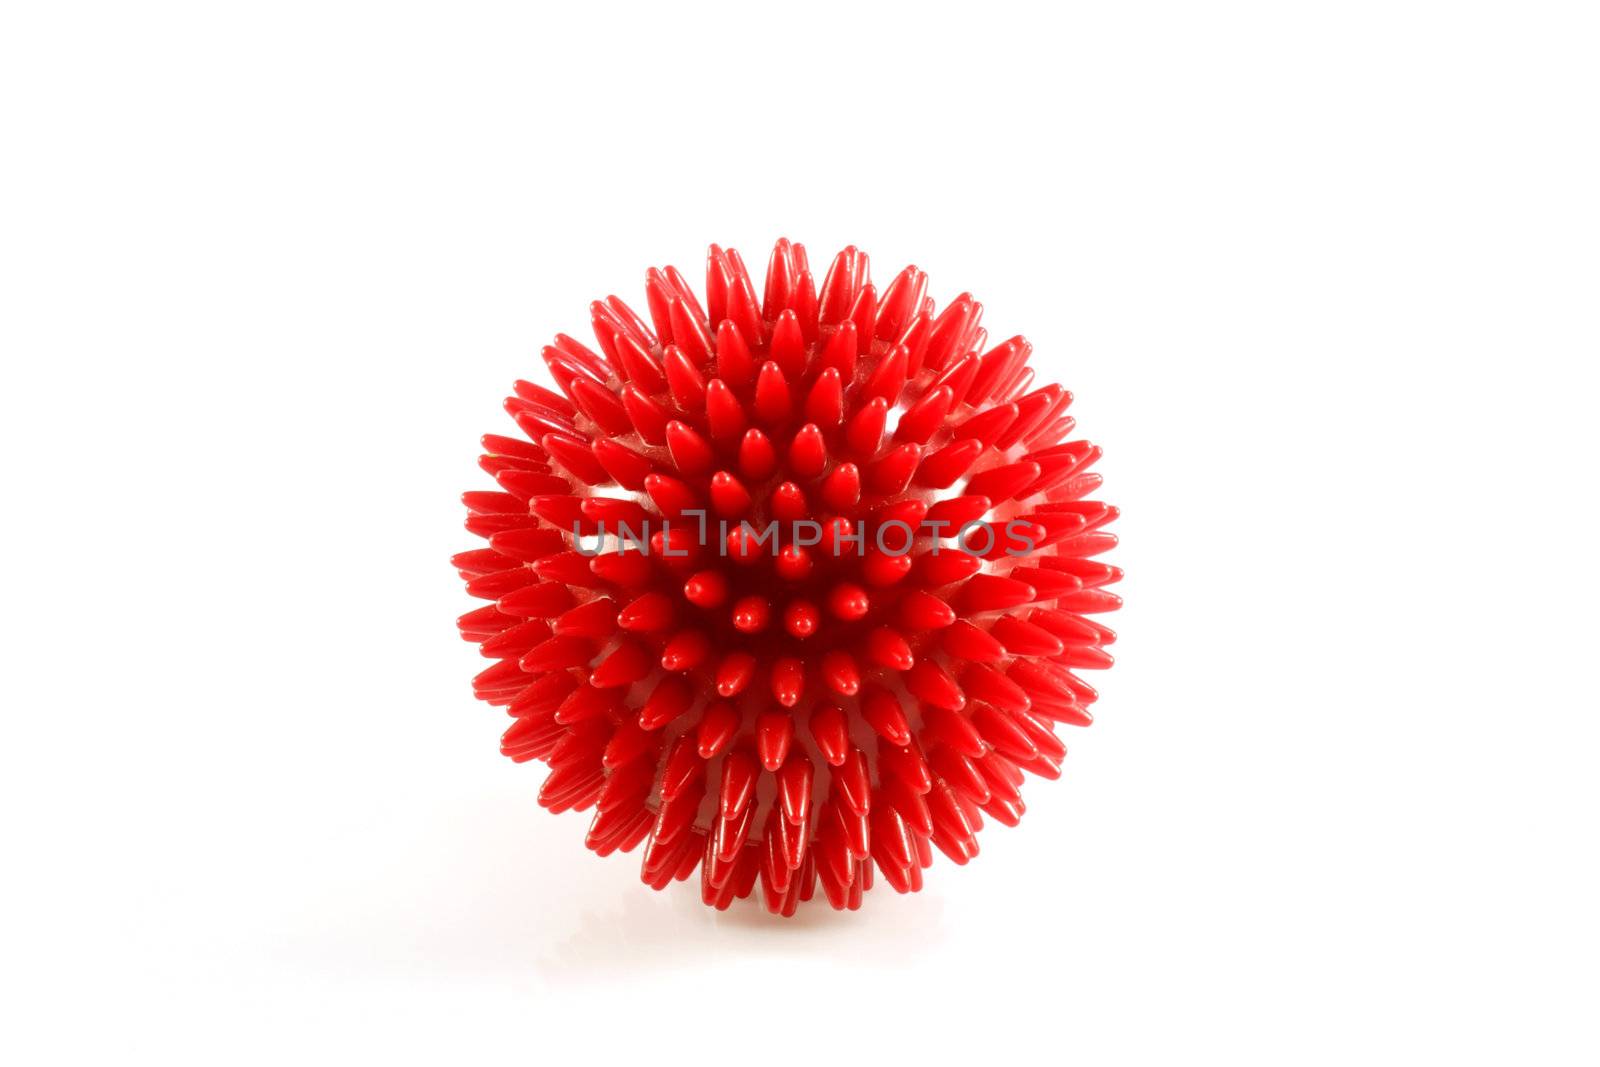 Red massge ball on white background